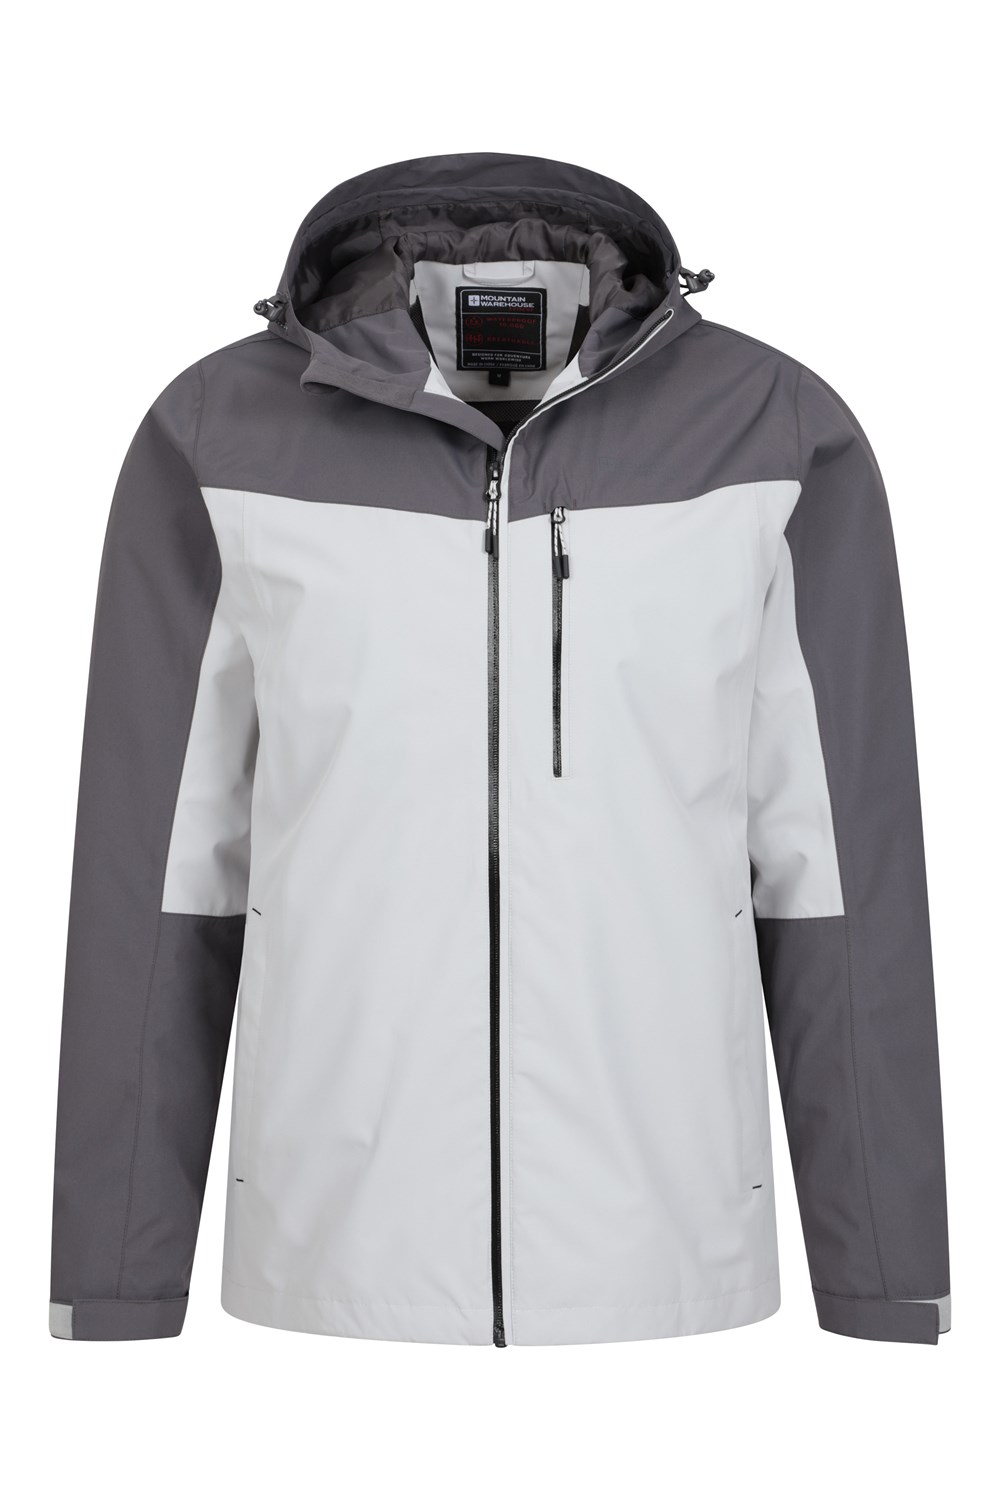 COLUMBIA - TITANIUM Waterproof Outdoor Jacket. Dimensions (cm) : Size:  X-Large. -Length: 77. -Width: 66. -Shoulder: 54. -Arm Length: 67